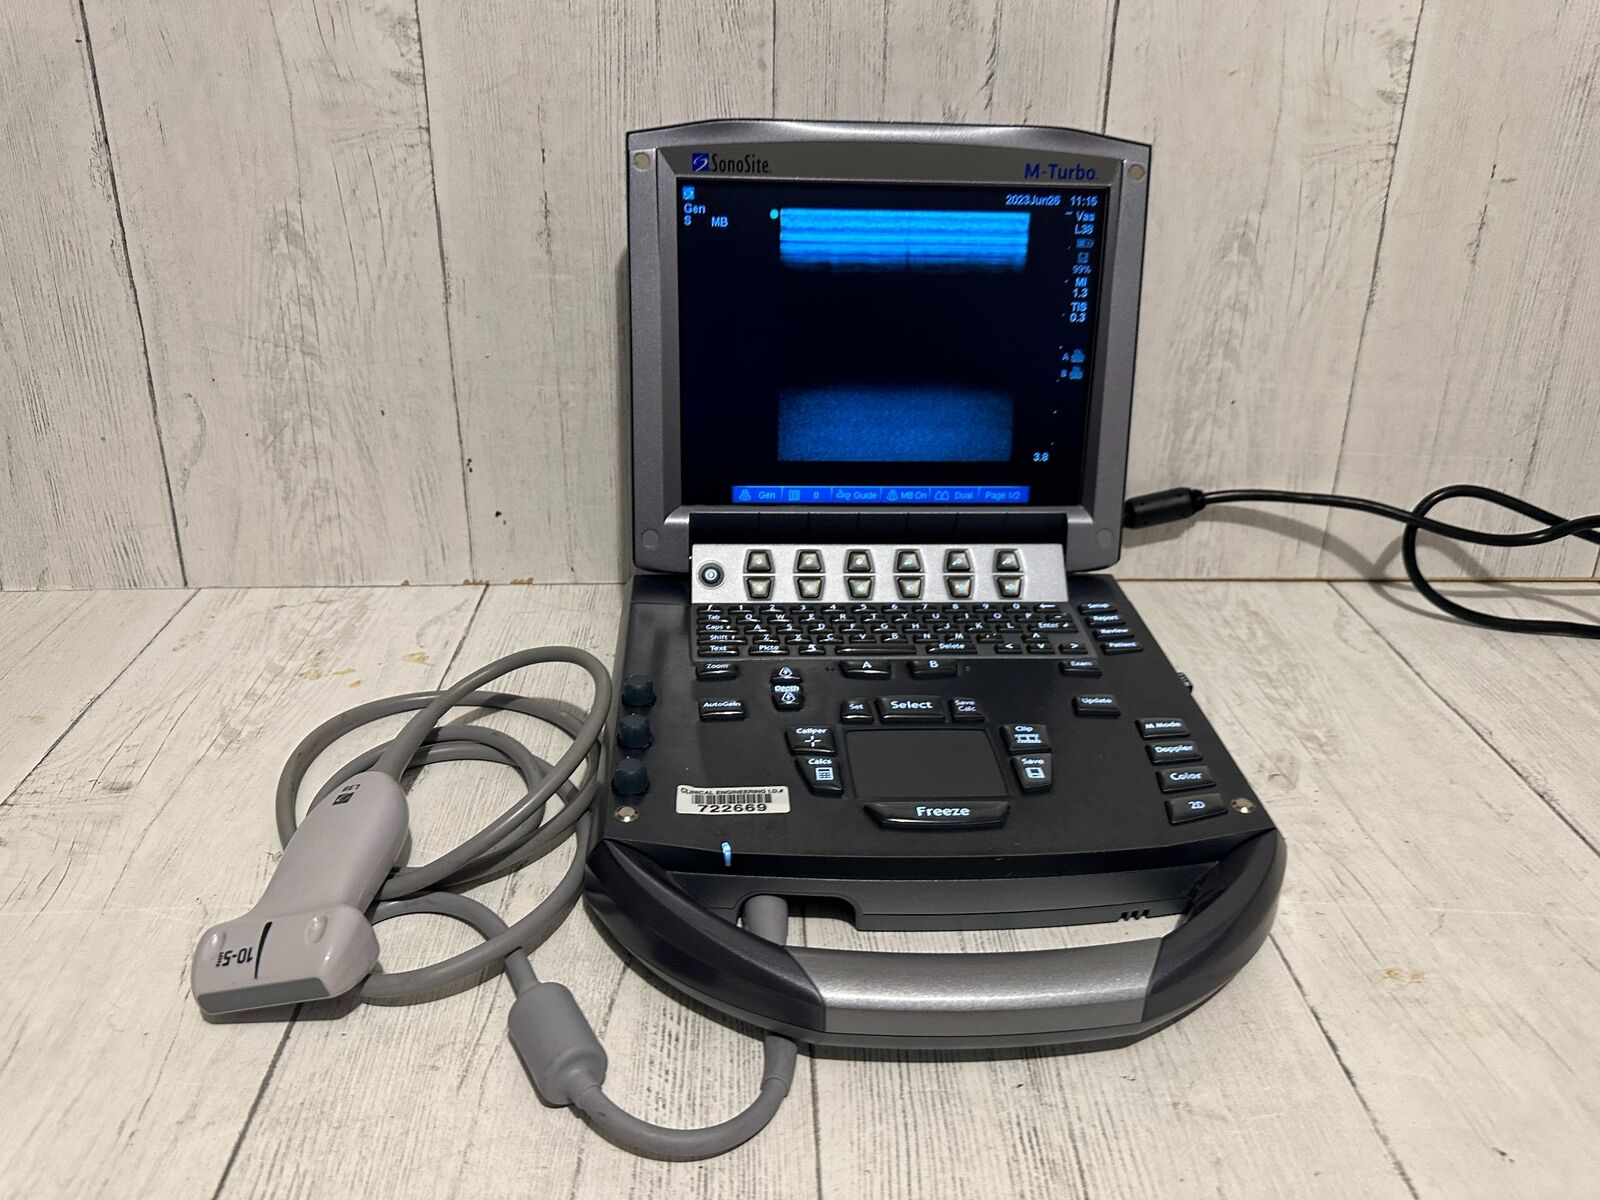 SonoSite M Turbo Portable ultrasound machine 2010 Very good condition-No Probe DIAGNOSTIC ULTRASOUND MACHINES FOR SALE